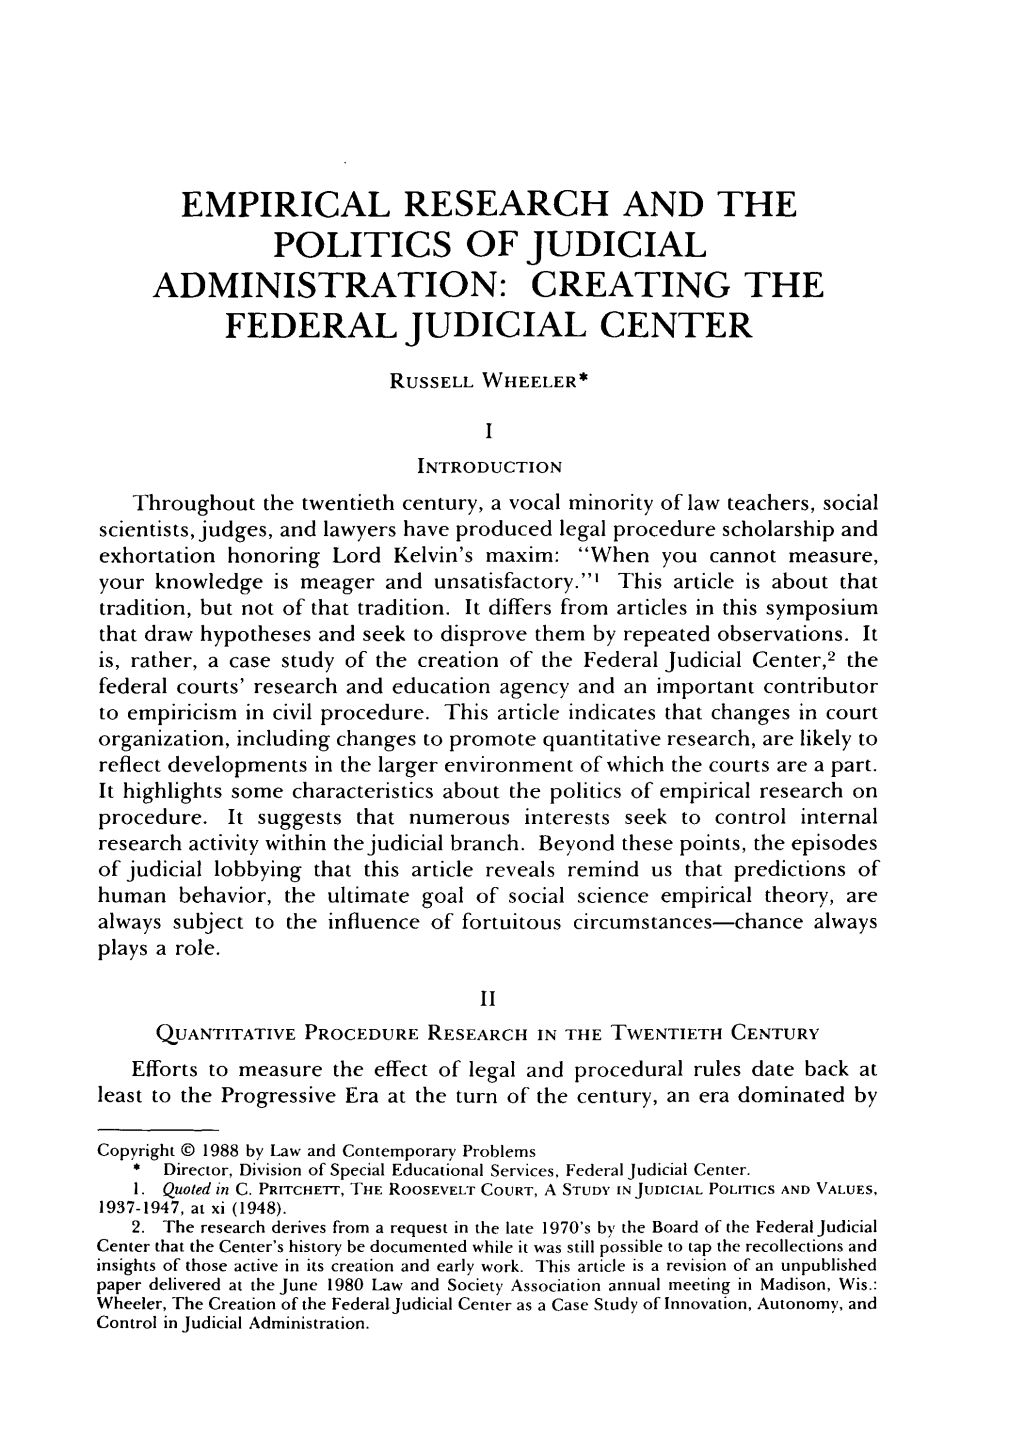 Empirical Research and the Politics of Judicial Administration: Creating the Federal Judicial Center